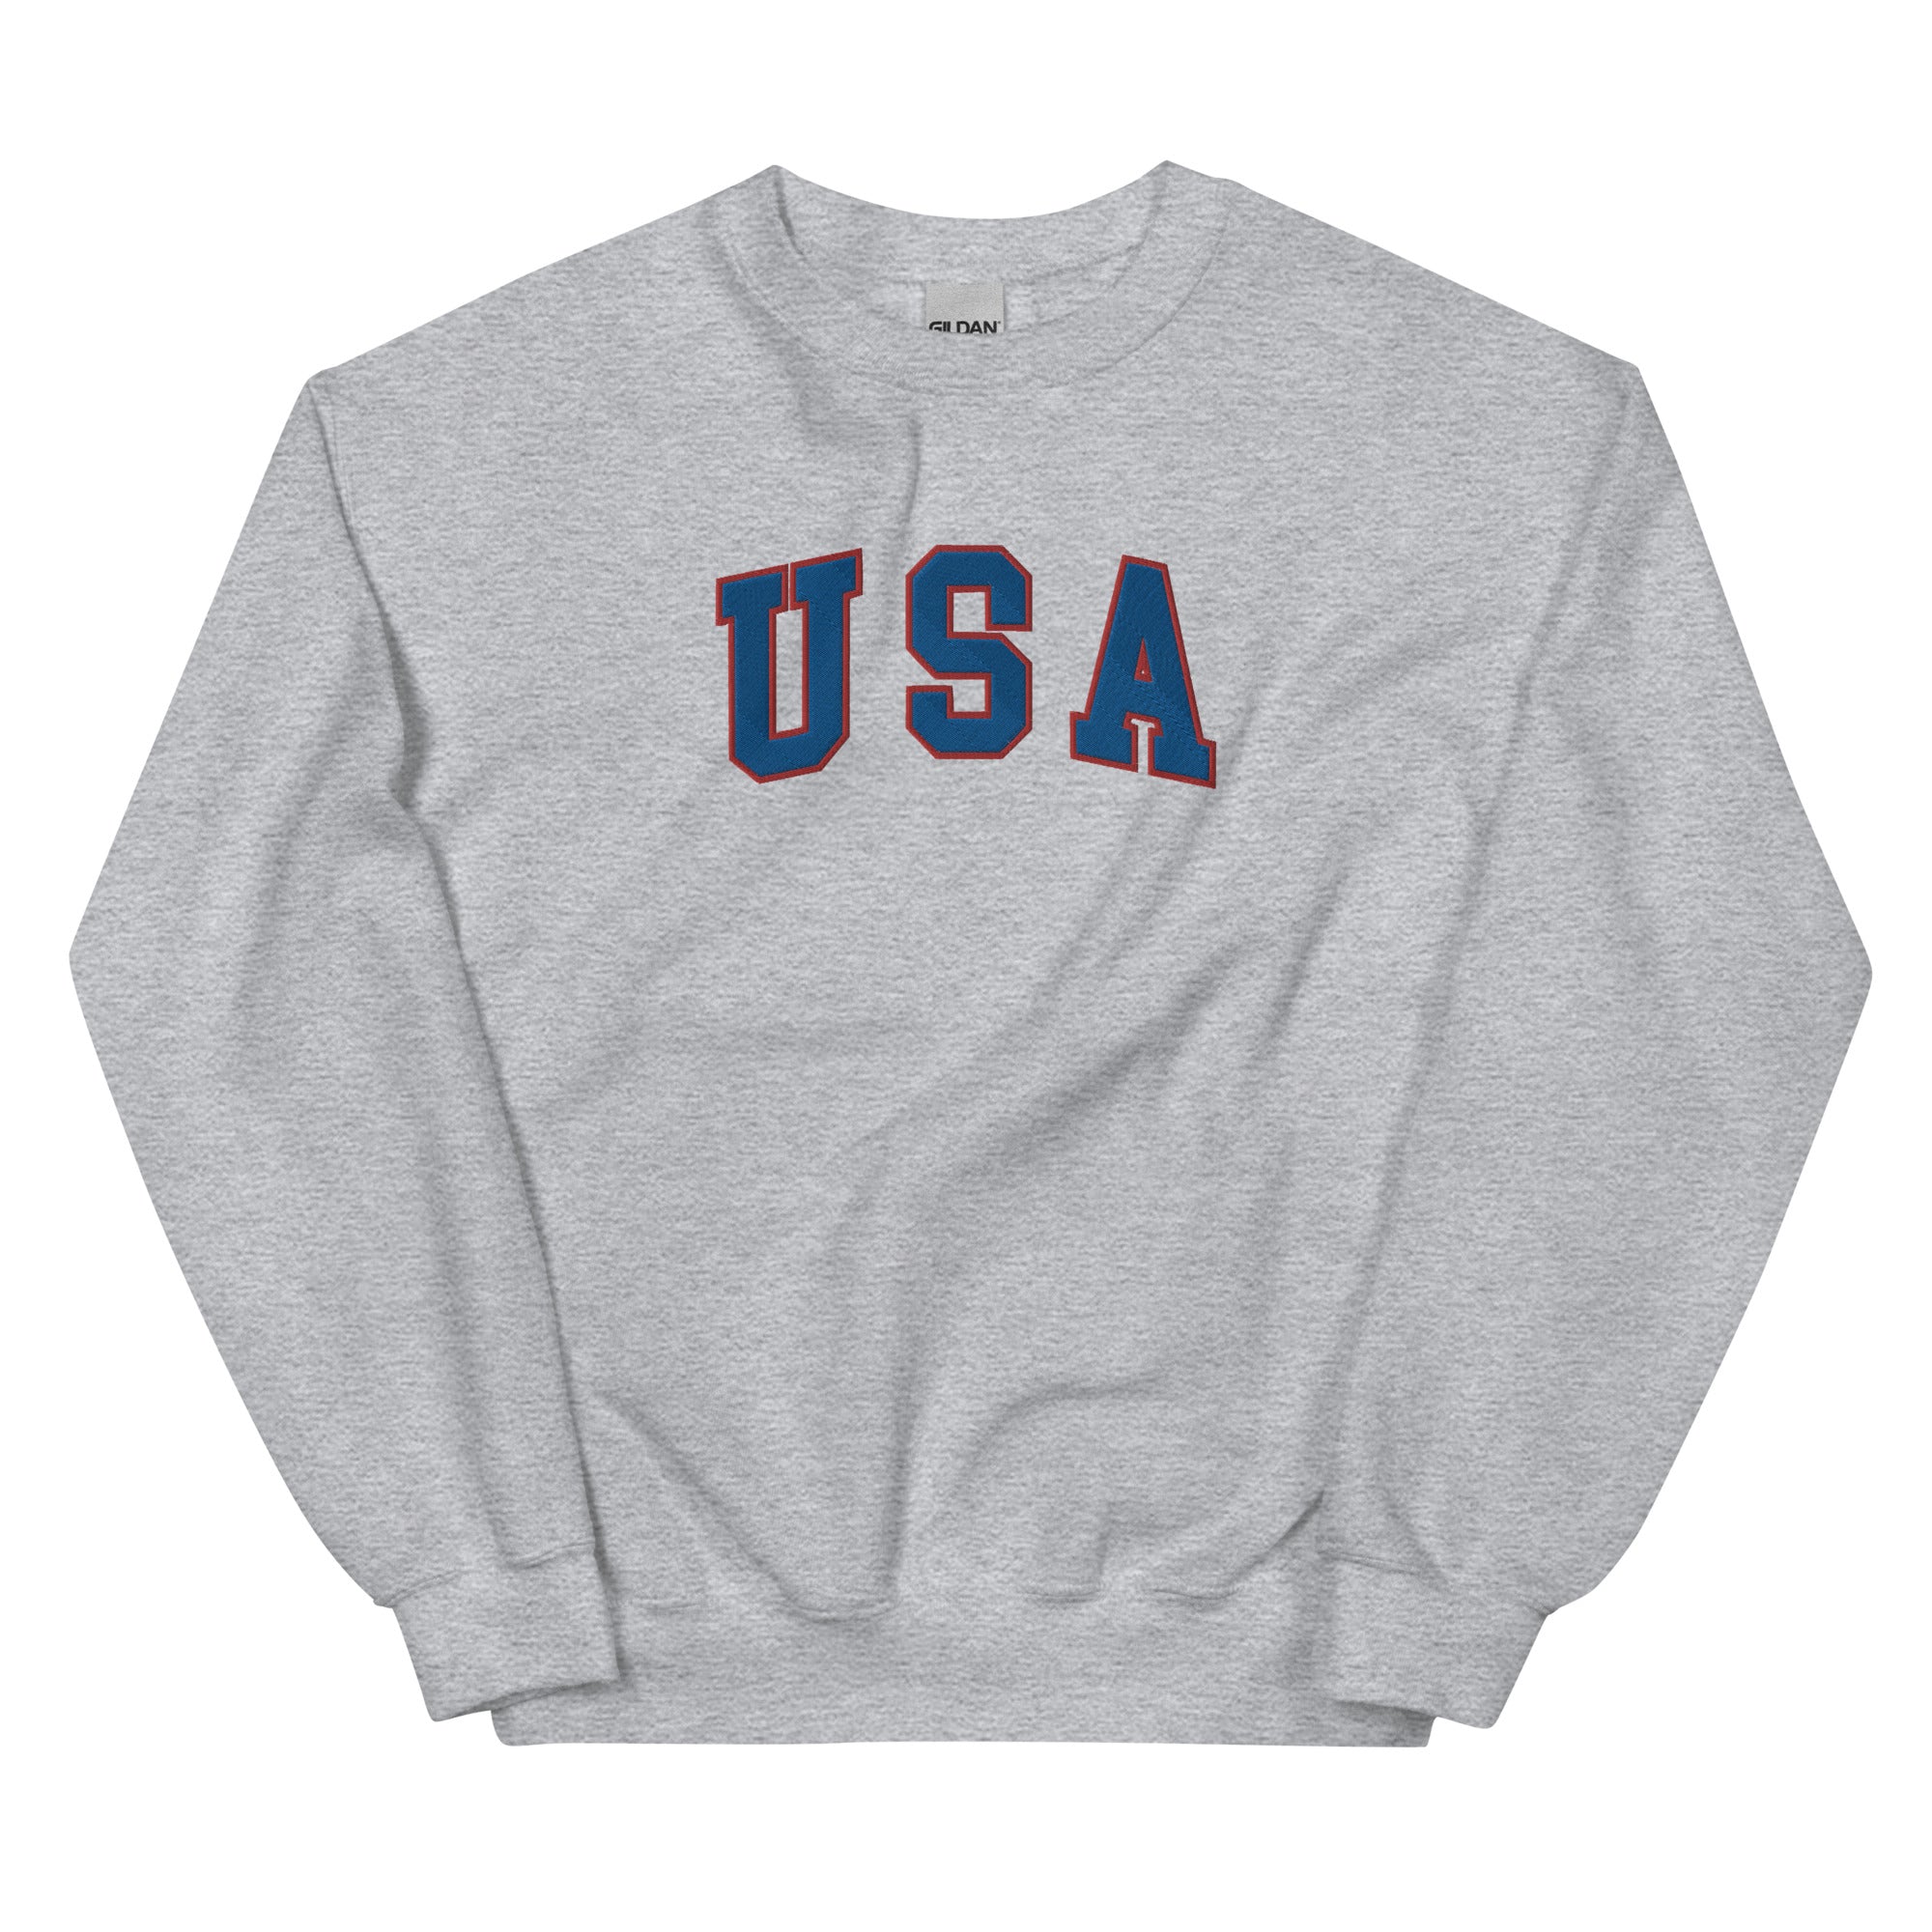 USA Embroidered Crewneck-Crewnecks-Barstool Sports-Barstool Sports